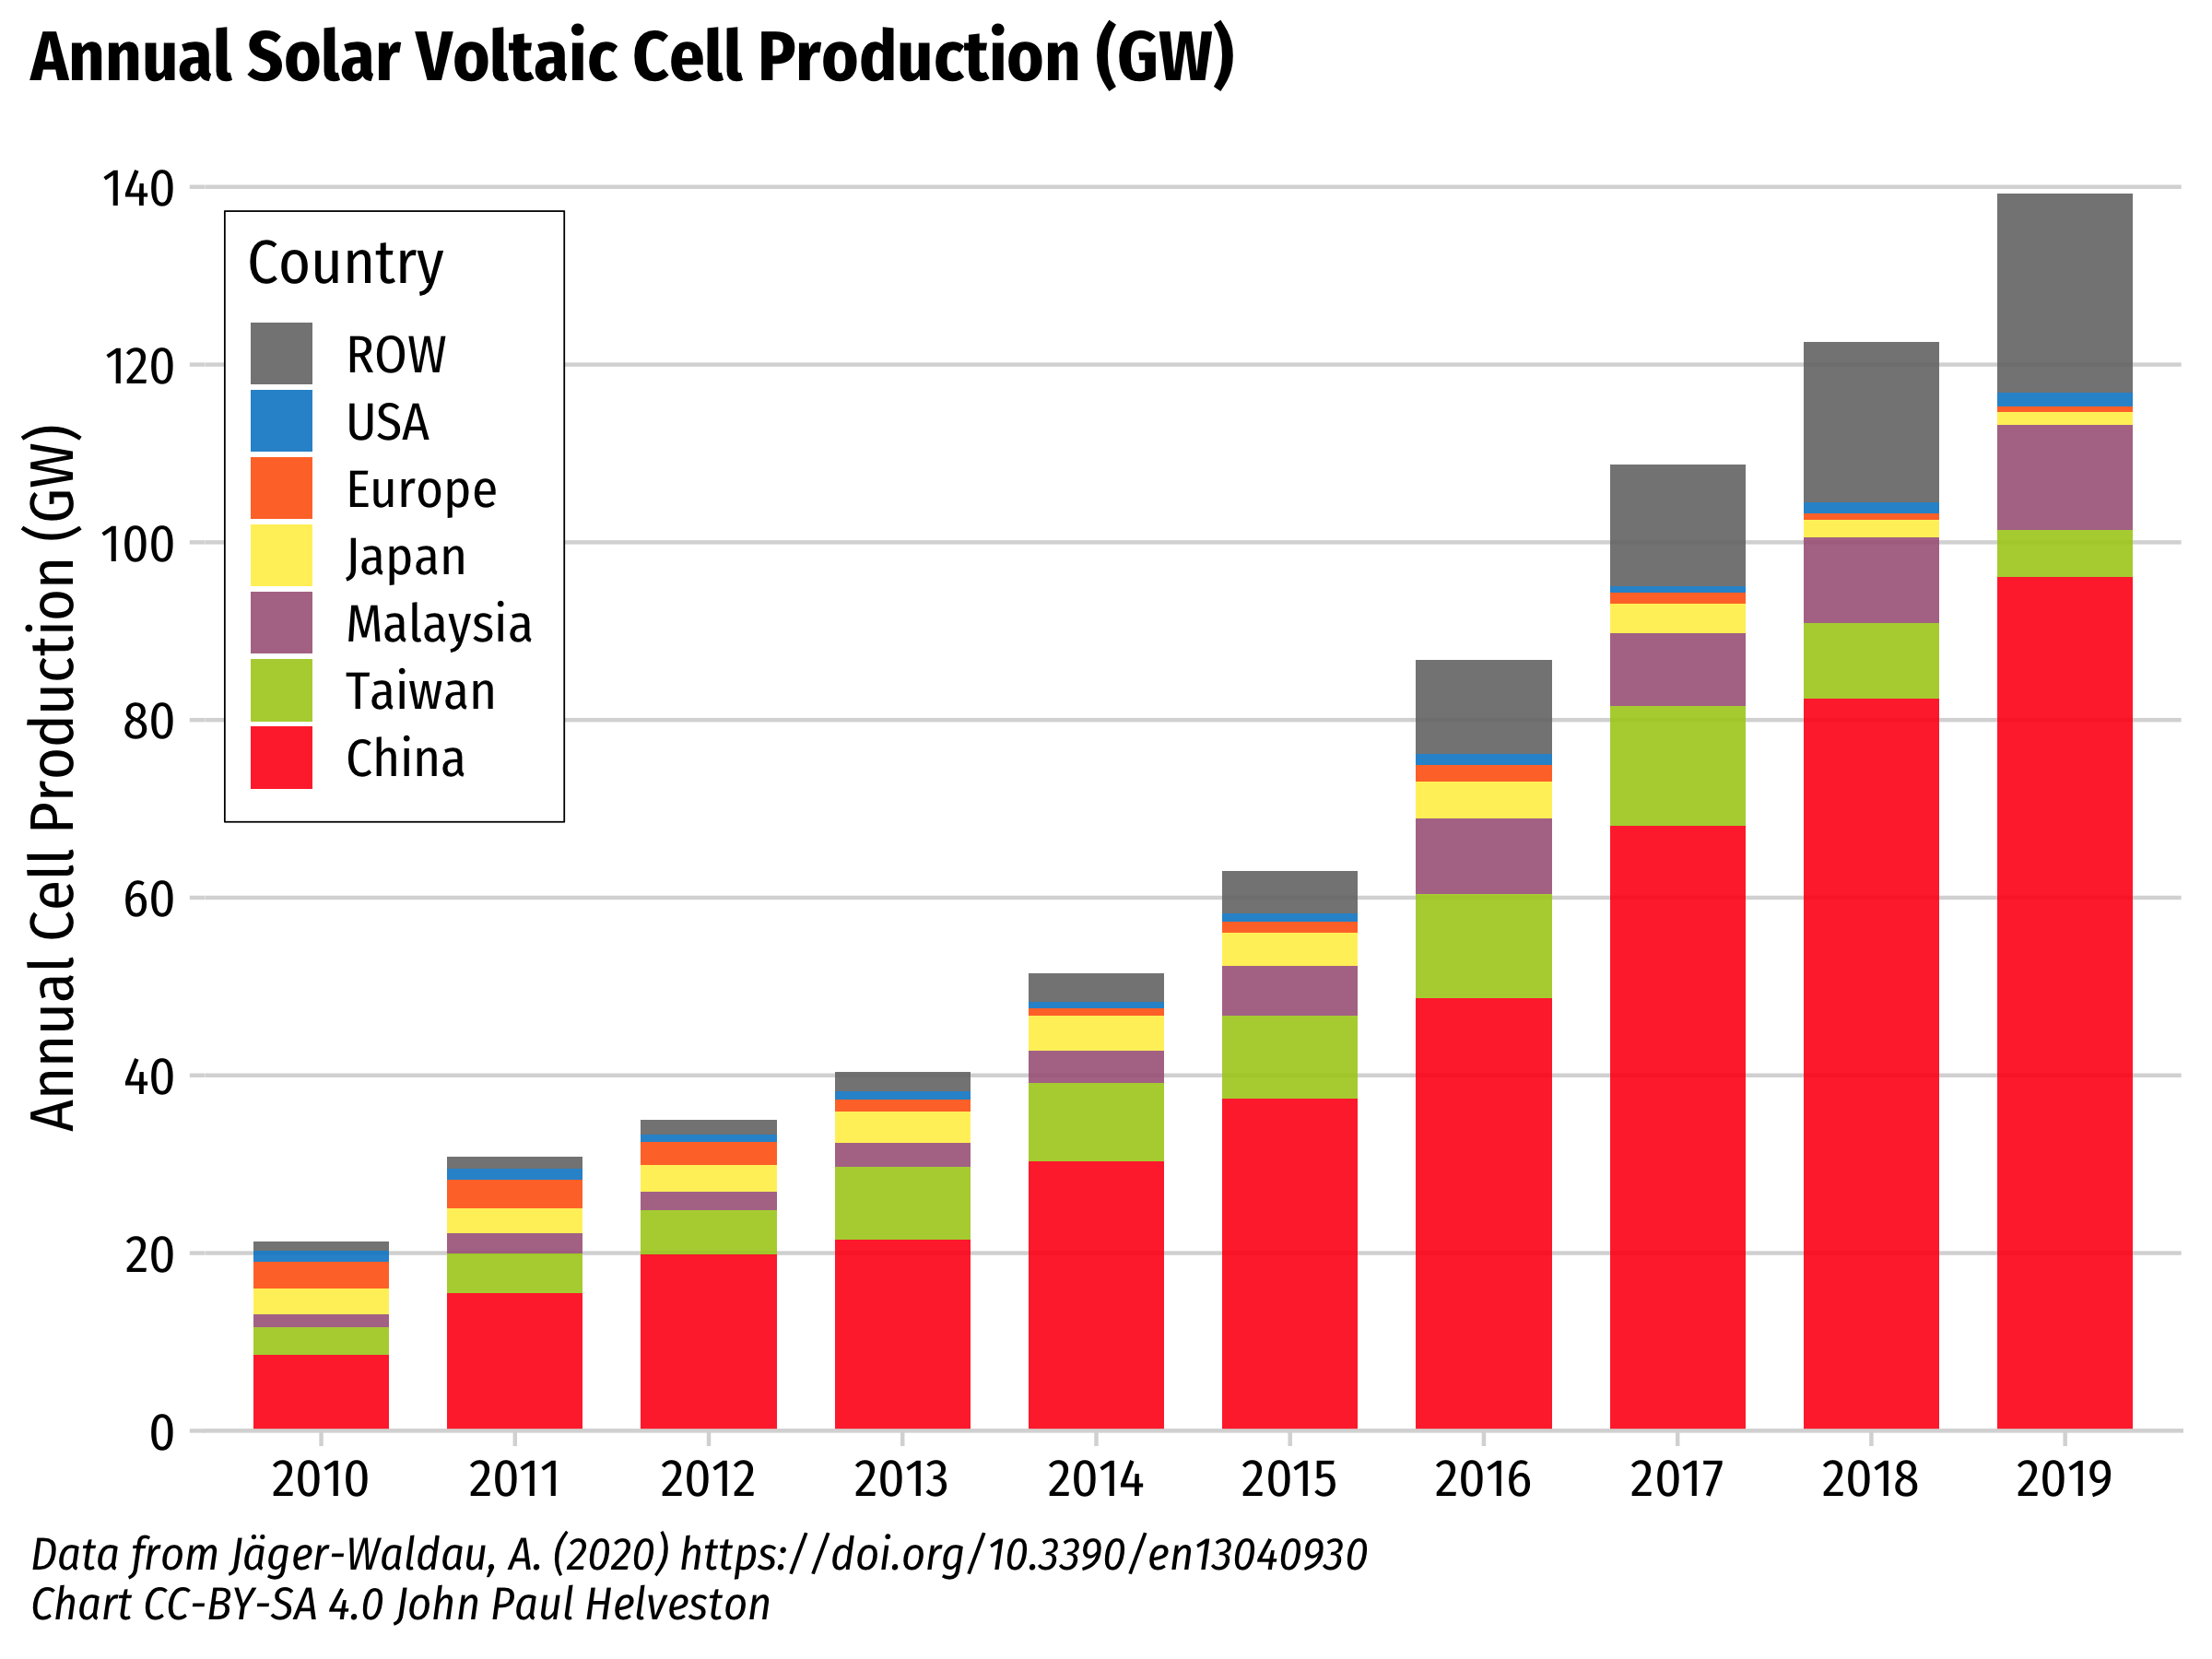 Annual Solar Voltaic Cell Production (GW), 2000 - 2018.